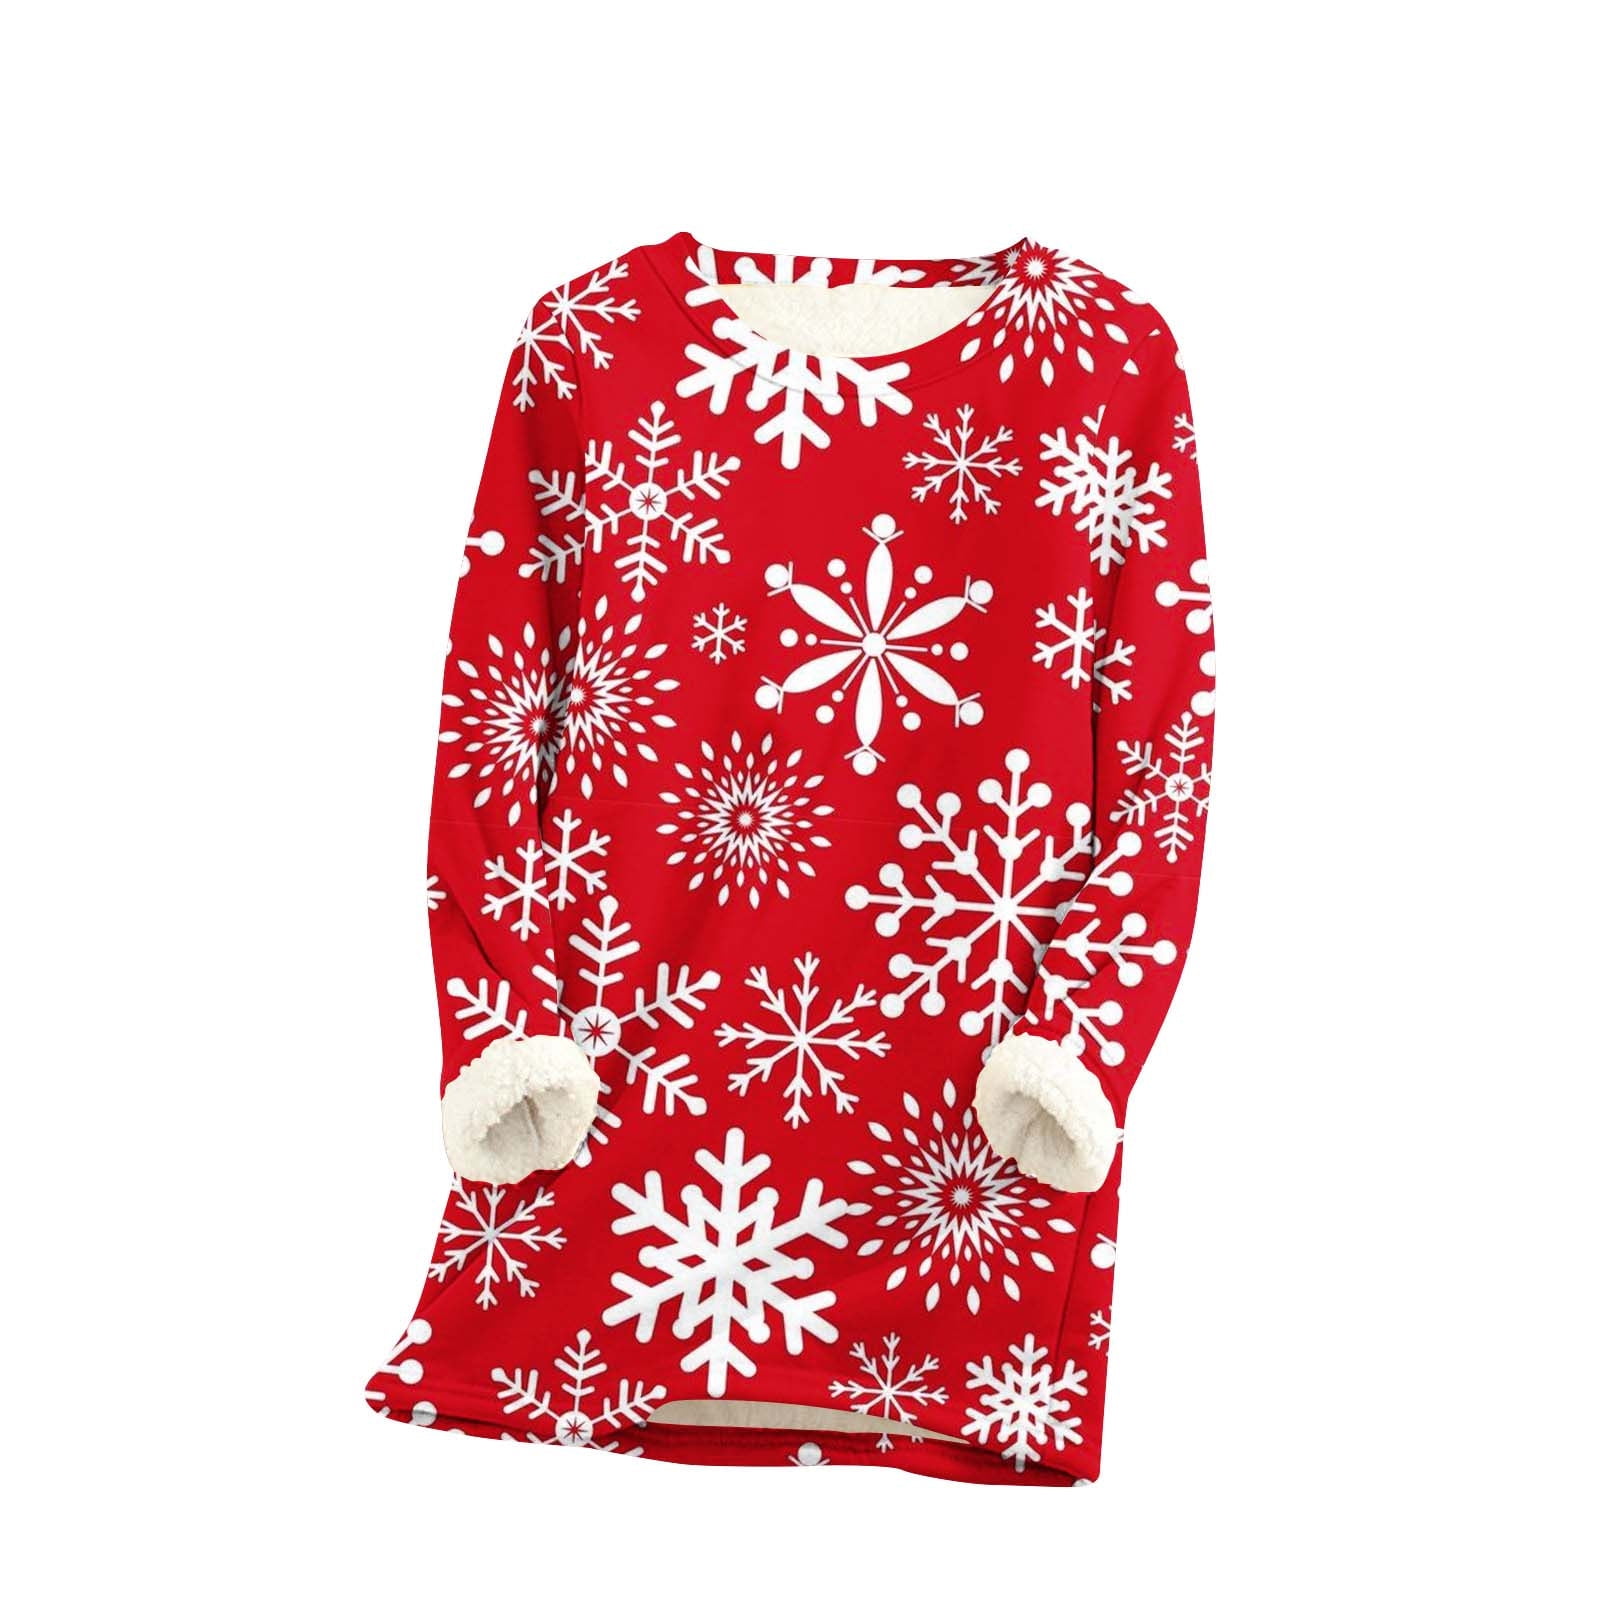 Dyegold Sherpa Sweatshirt Women Teen Girls Winter Tops Sherpa Lined Casual Fluffy Warm Shirts Graphic Clearance Prime Sweatshirt Thermal Thick